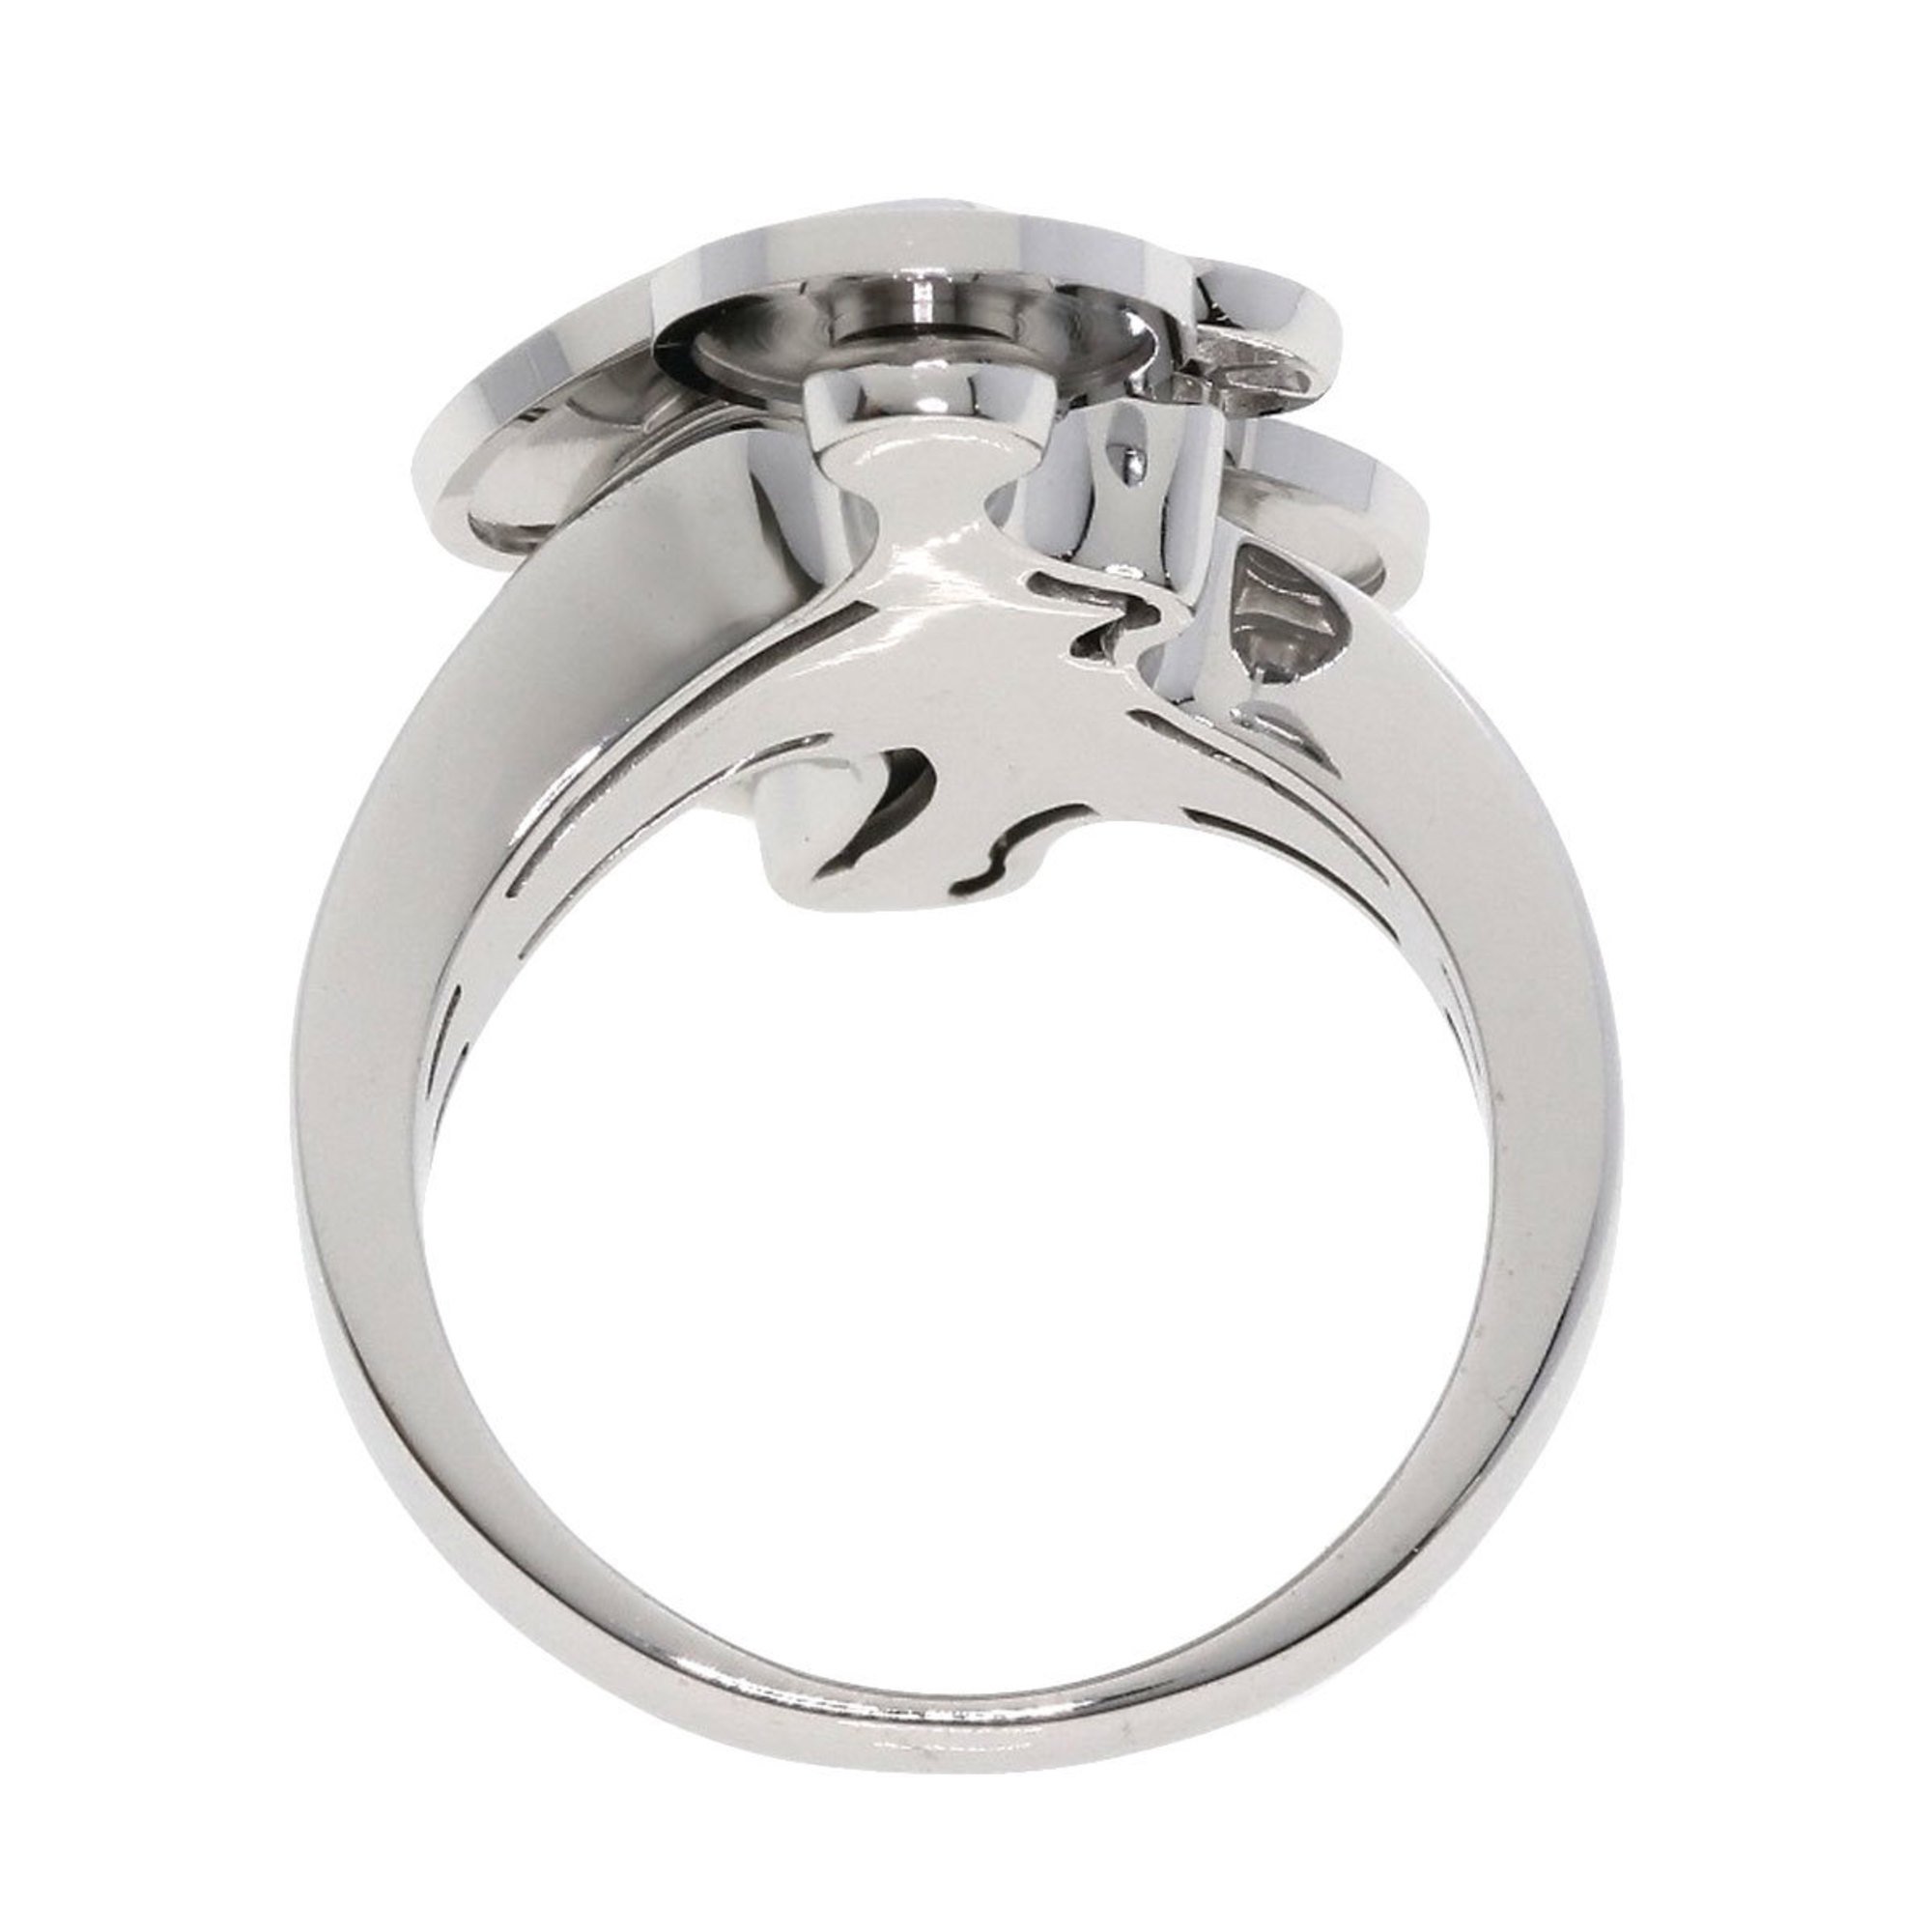 BVLGARI Cichlady Diamond Ring, 18K White Gold, Women's